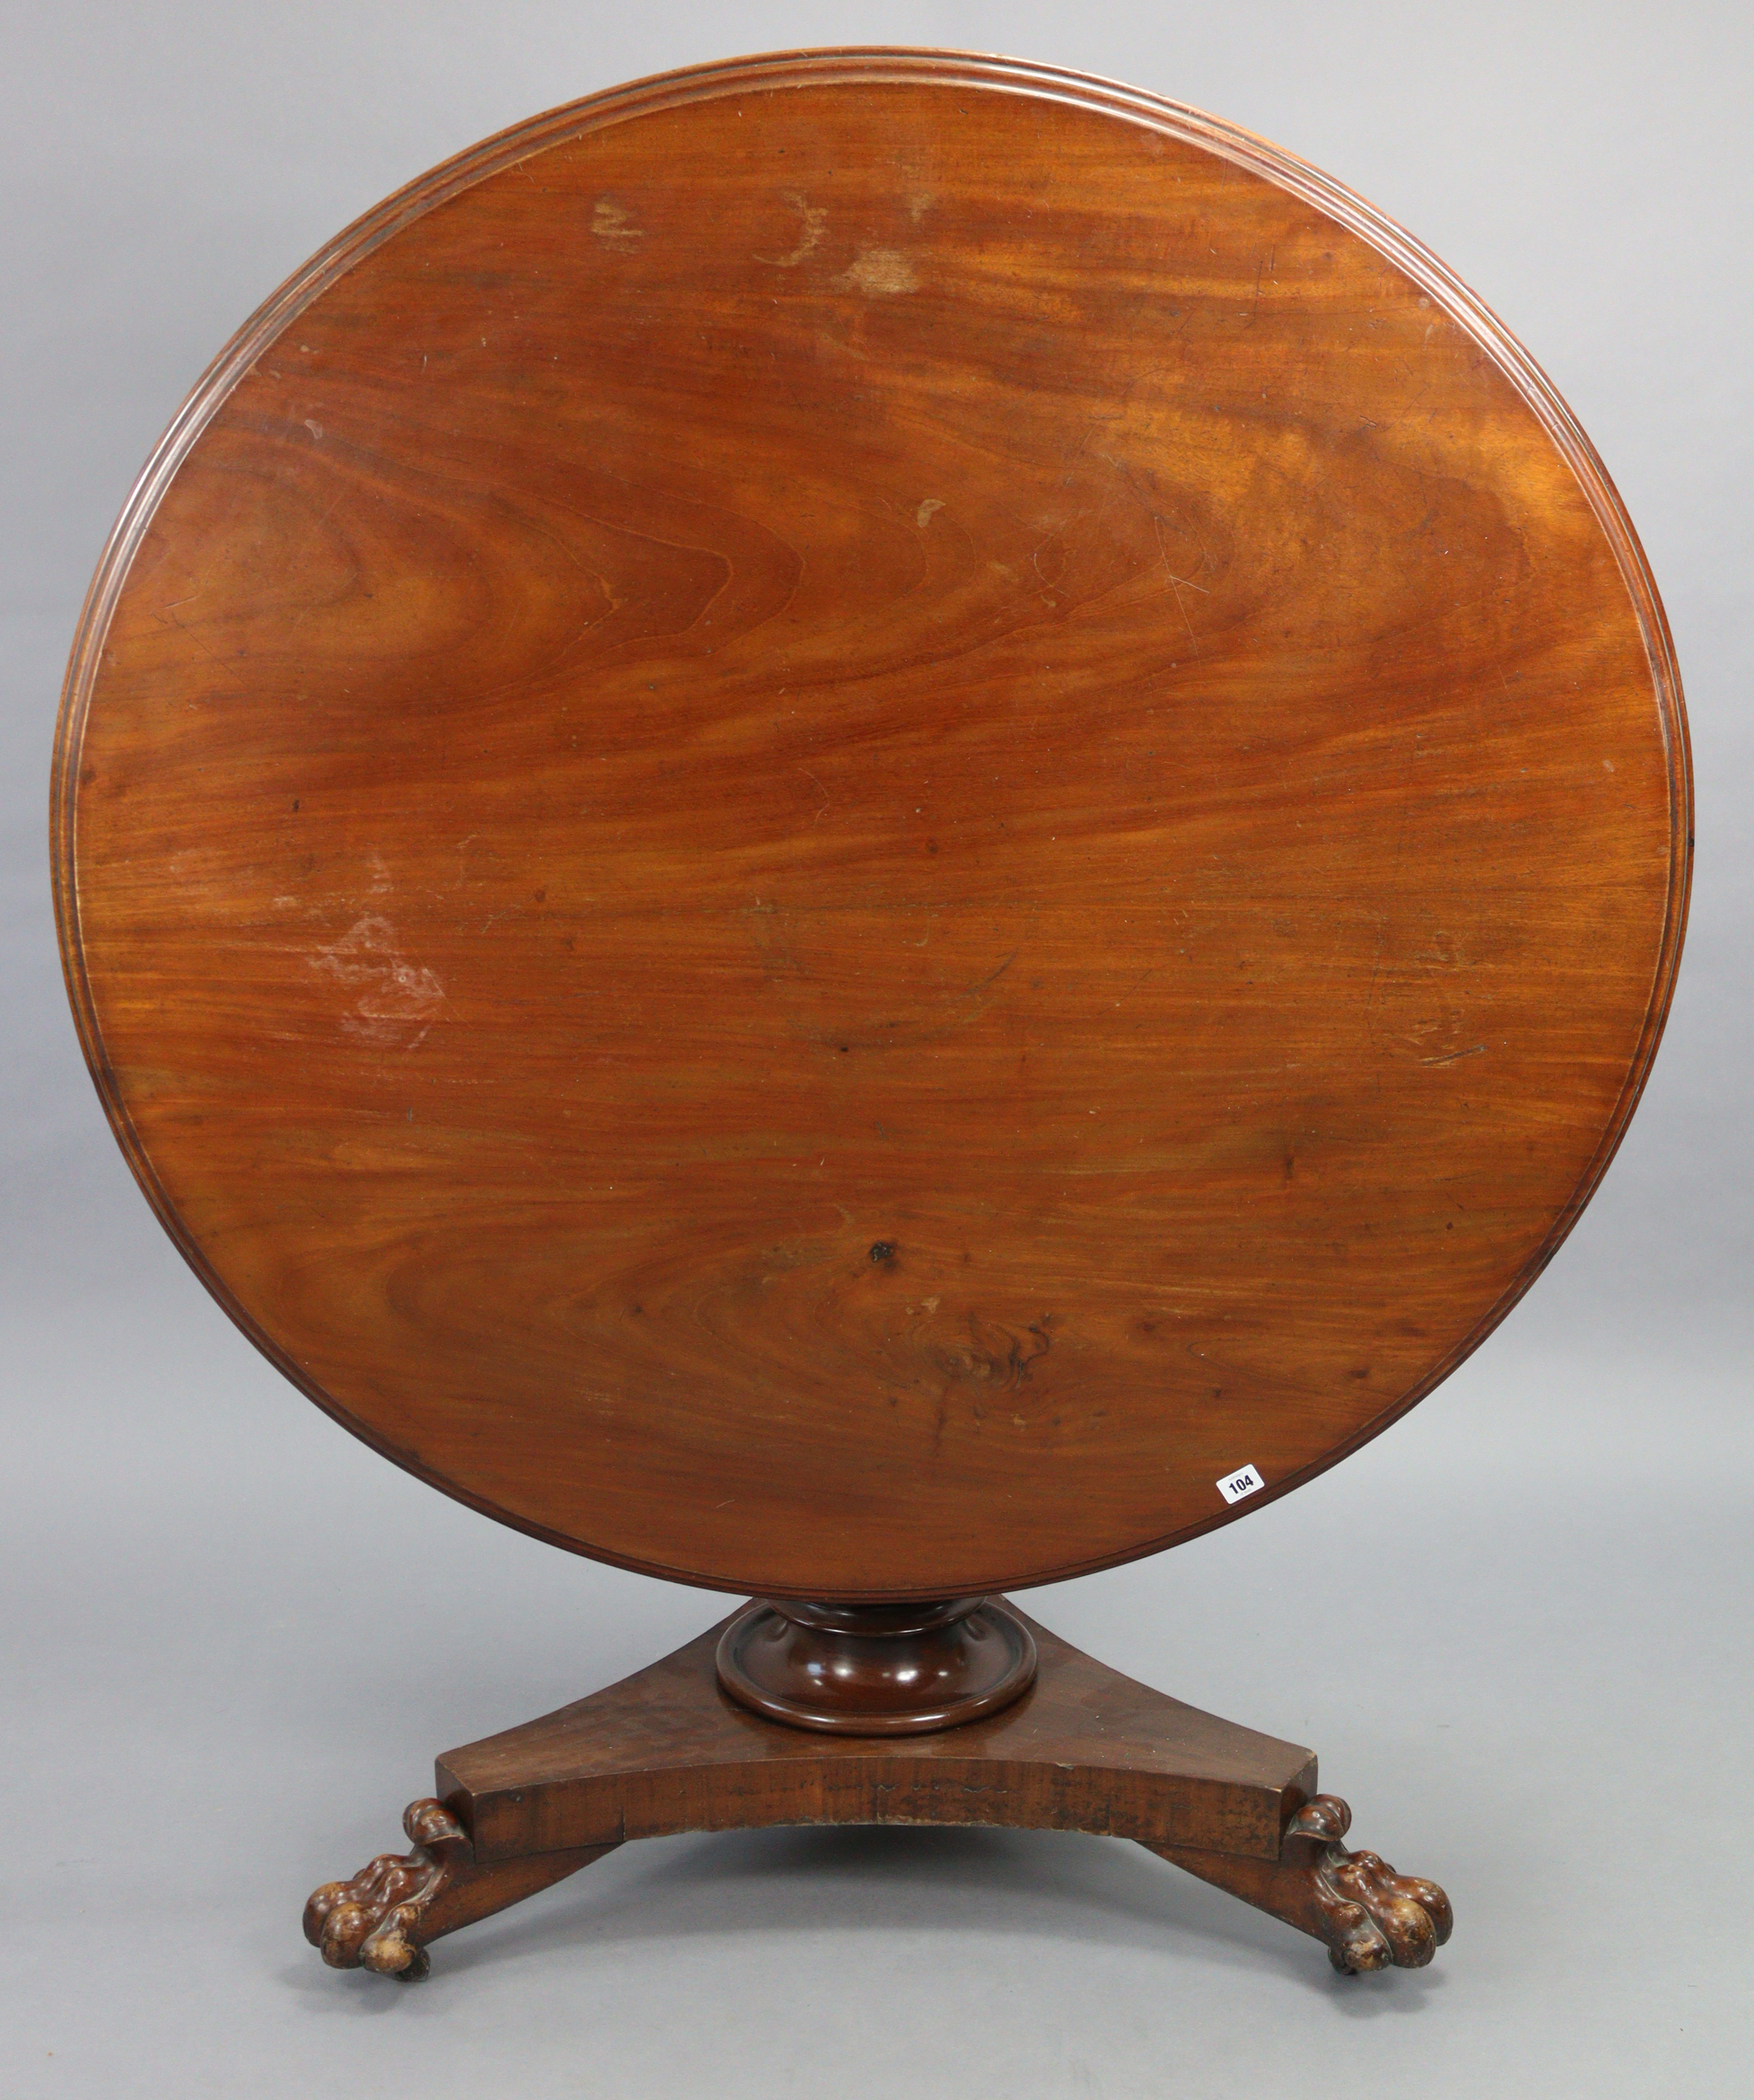 . A 19th century mahogany “loo” table or dining table with a circular tilt-top, & on an octagonal